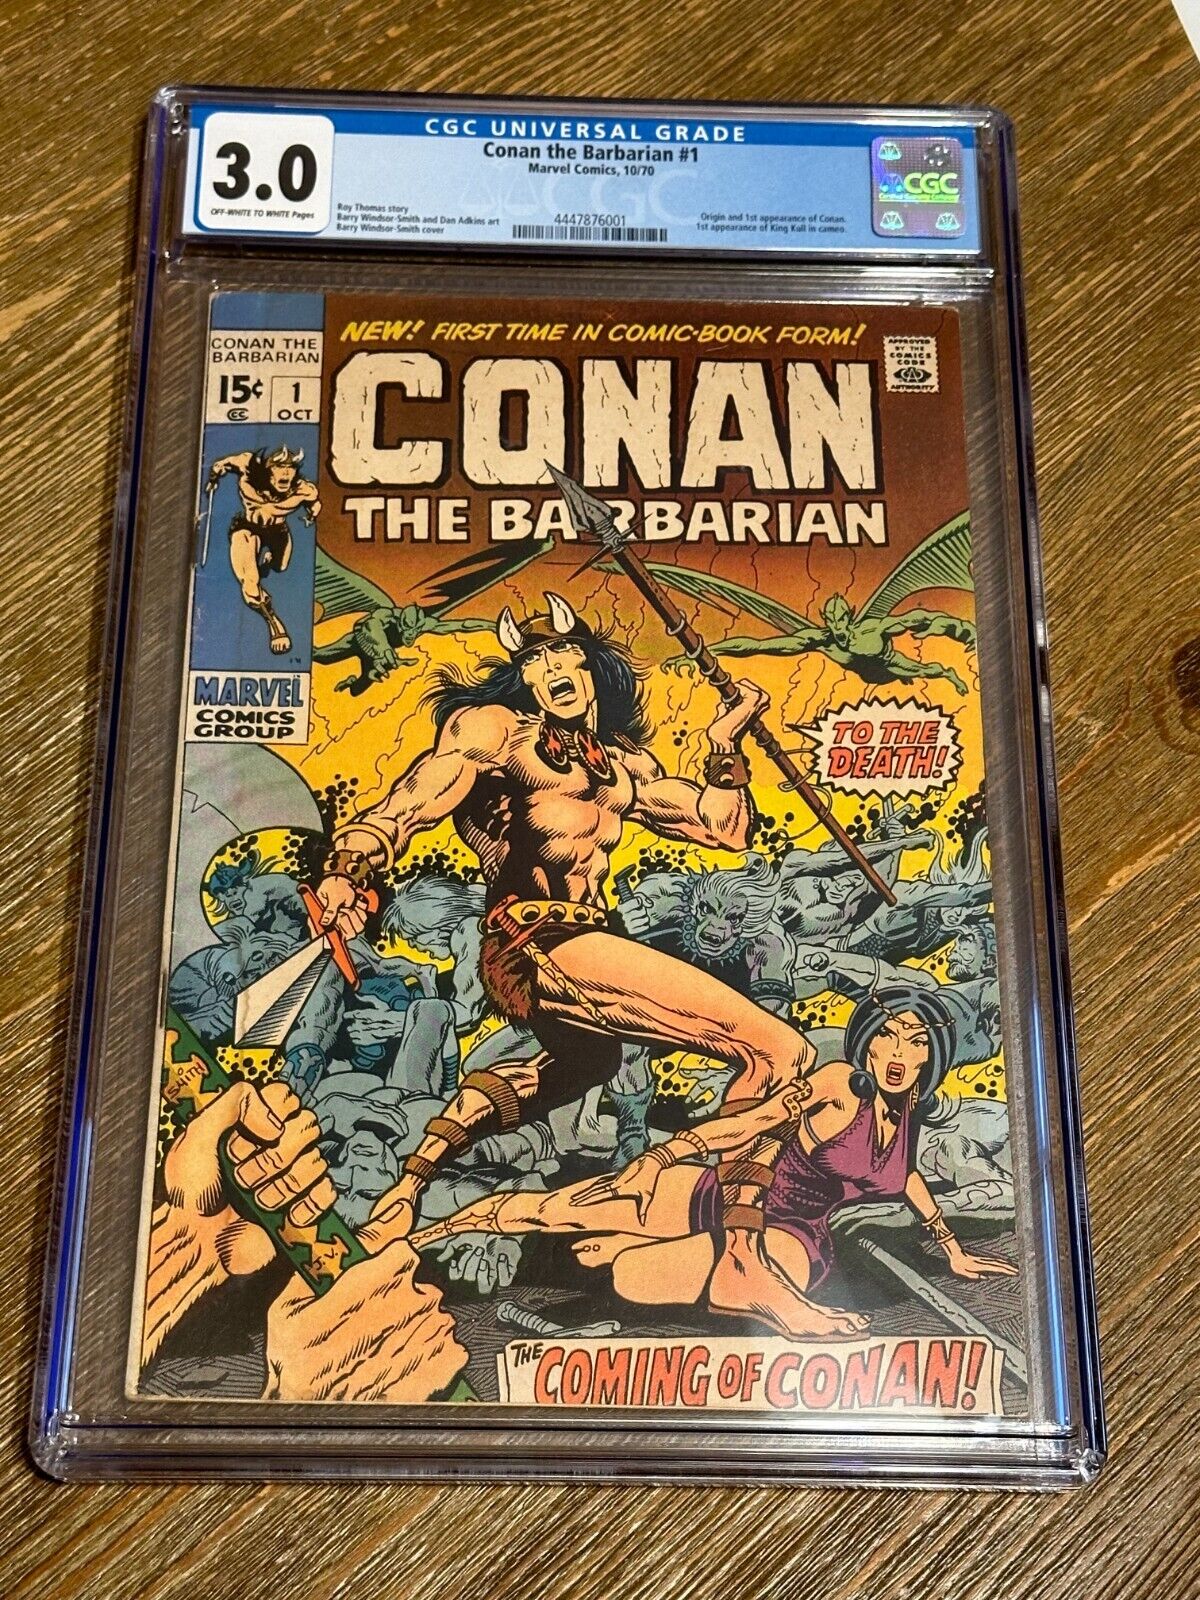 Conan the Barbarian #1 - The Coming of Conan - Marvel 1970 -CGC 3.0